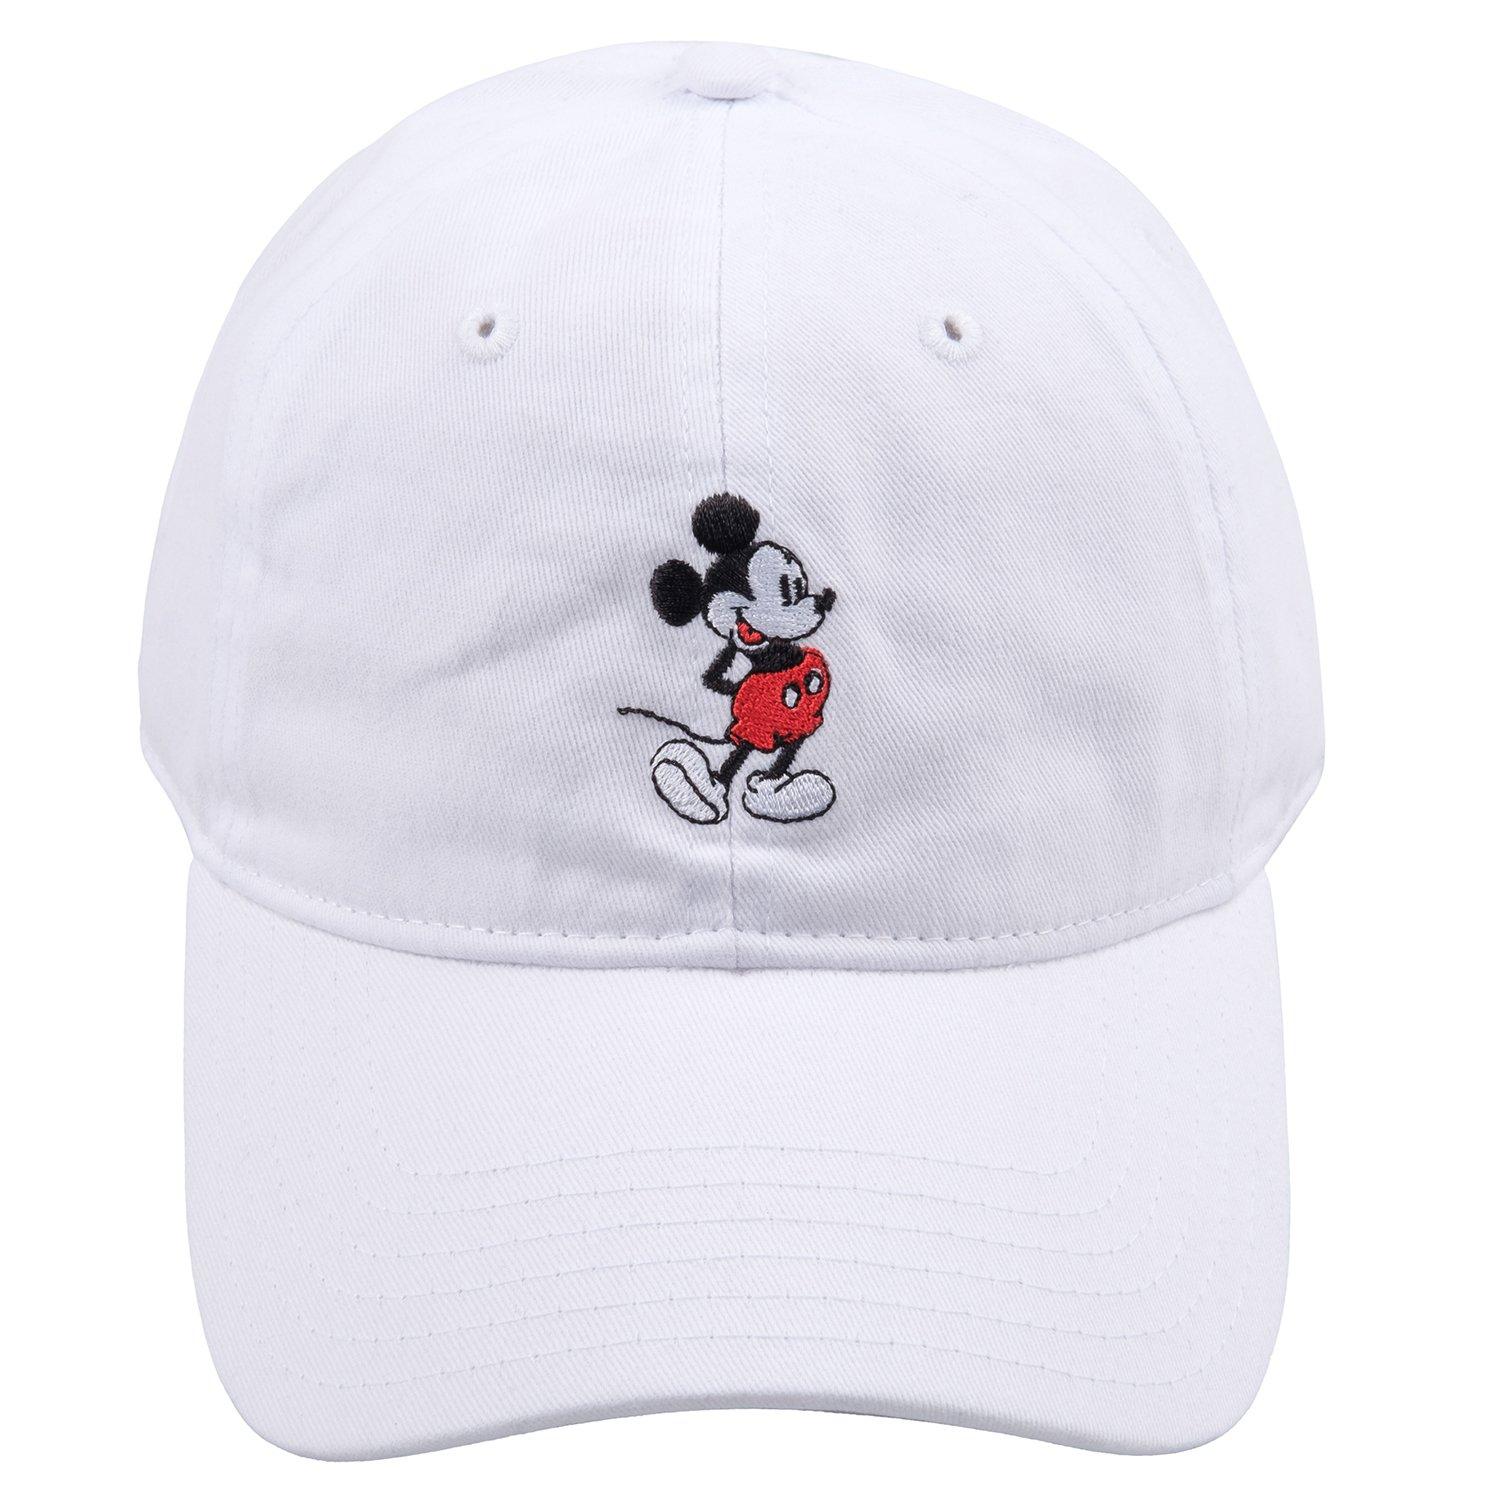 Mickie Patch Adjustable Baseball Cap Hat